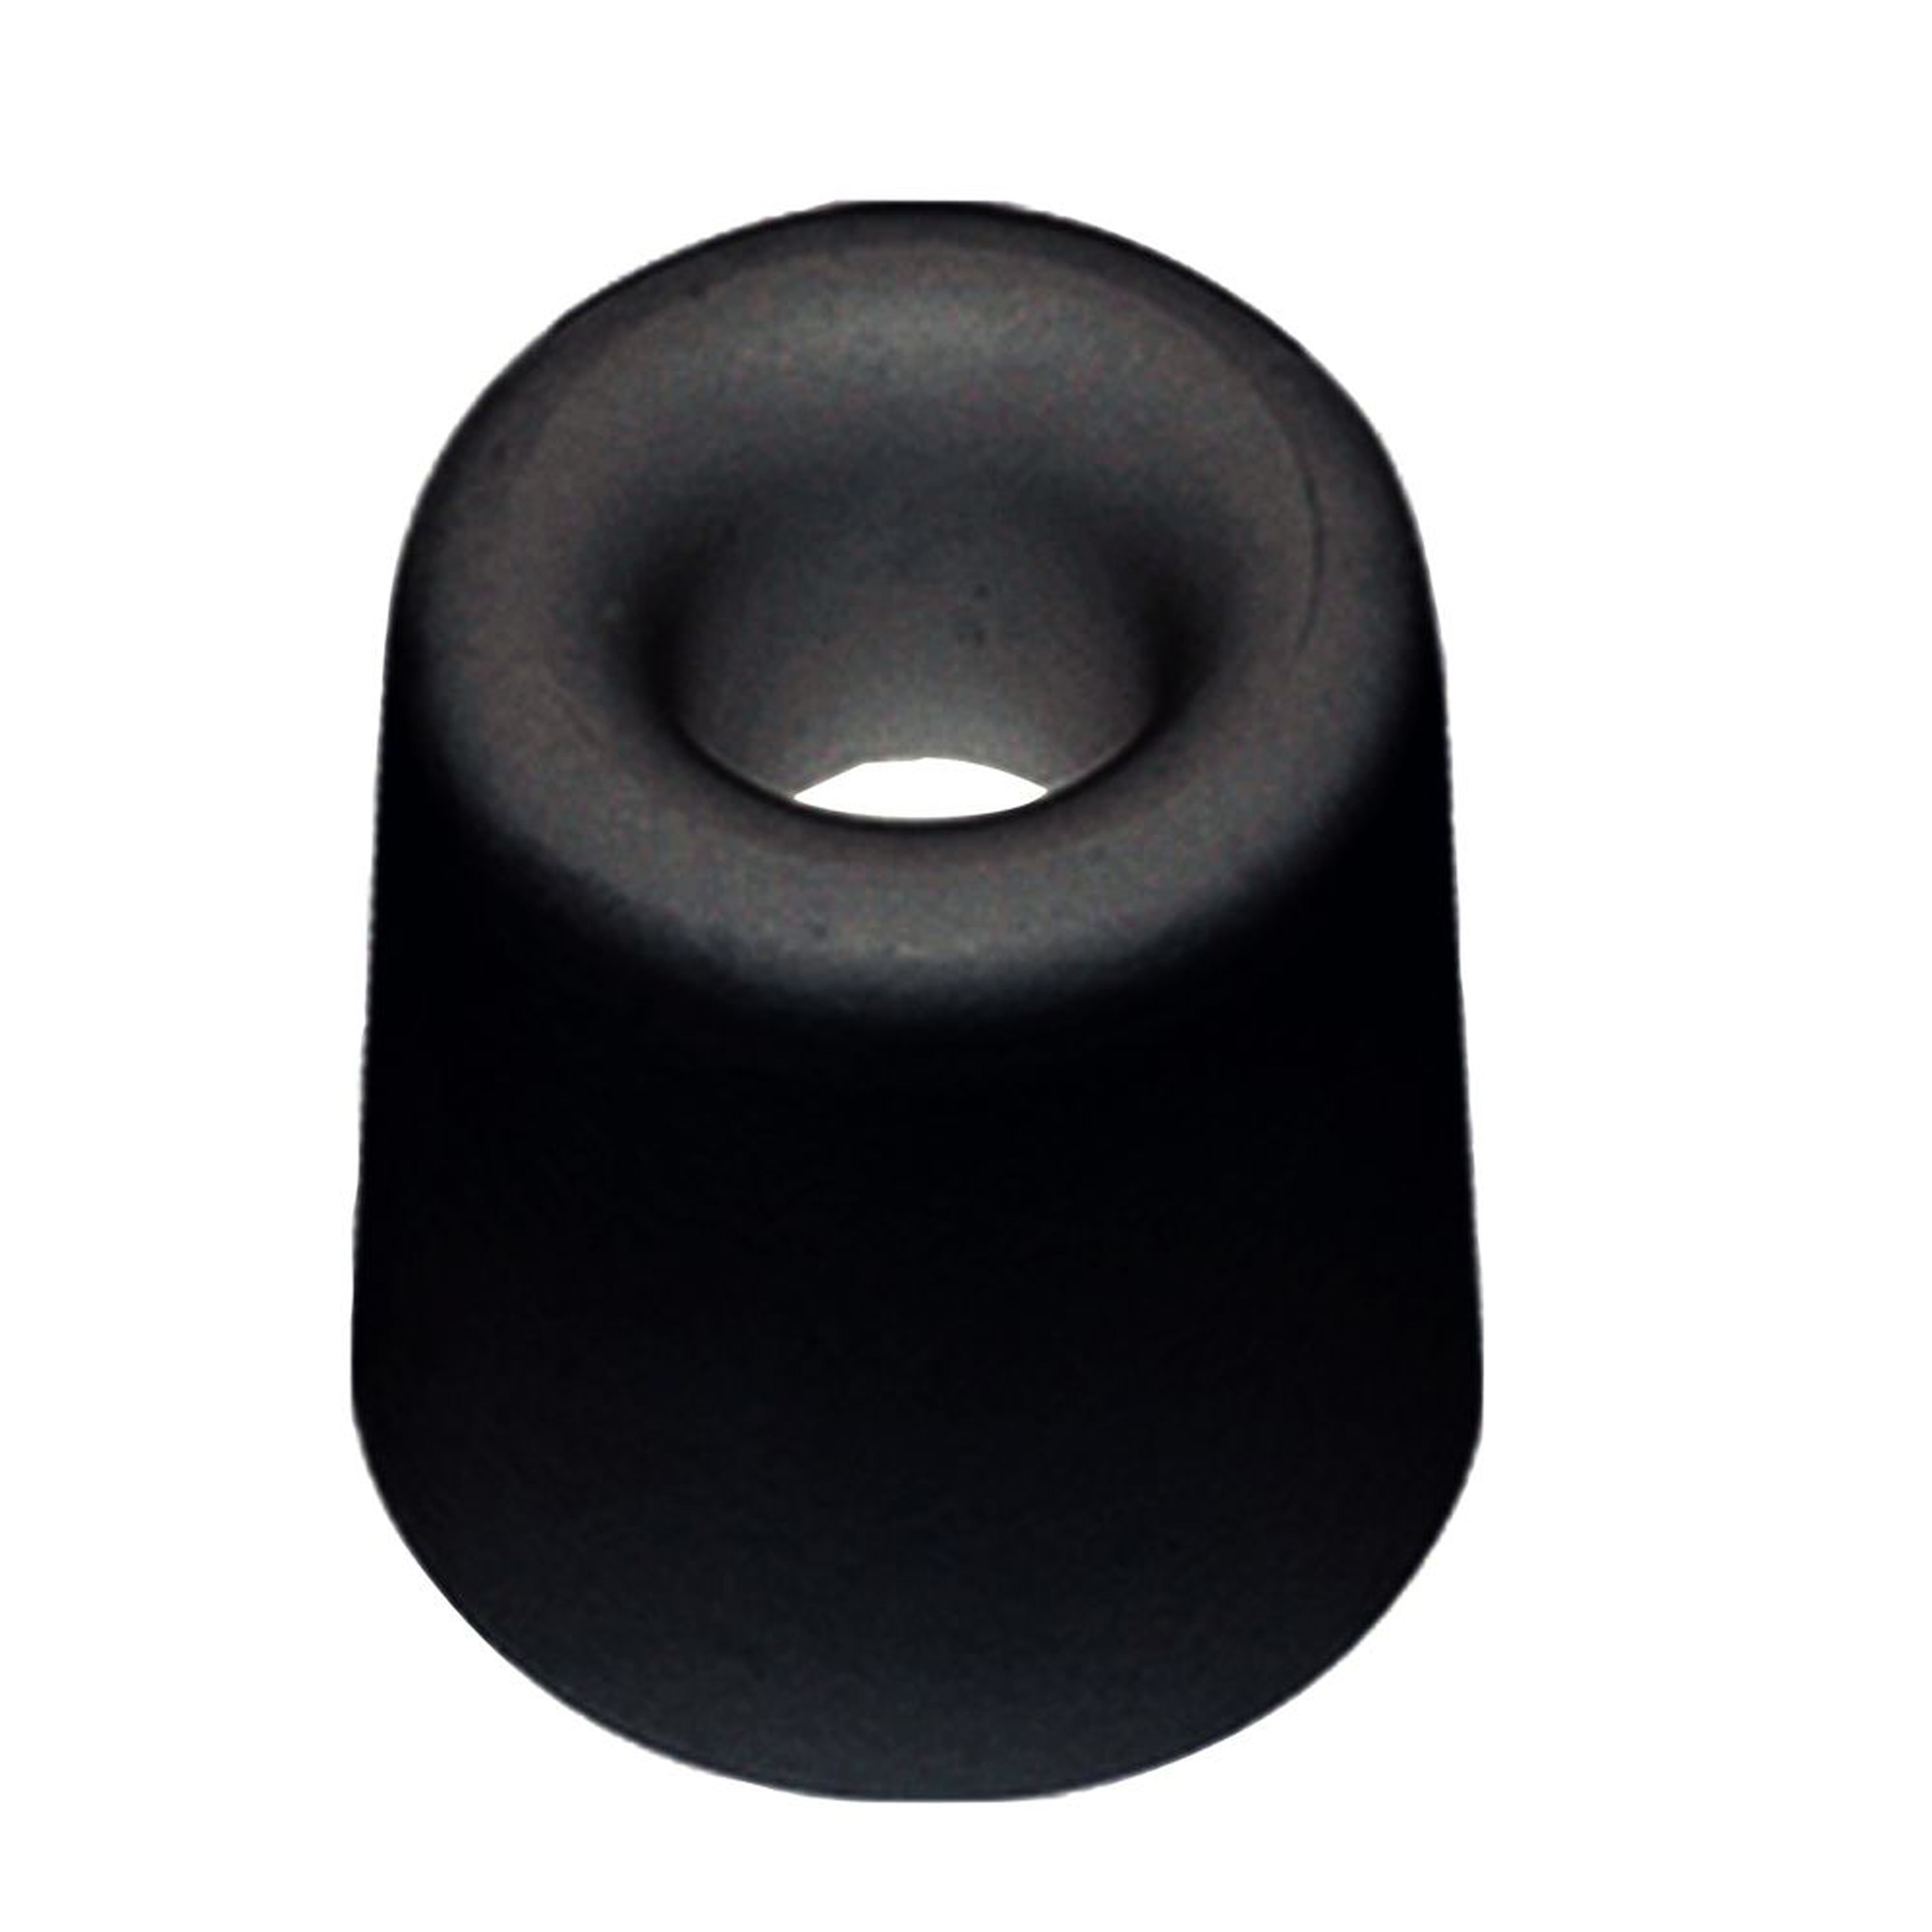 Deurbuffer deurstopper zwart rubber 35 x 30 mm schroefbevestiging